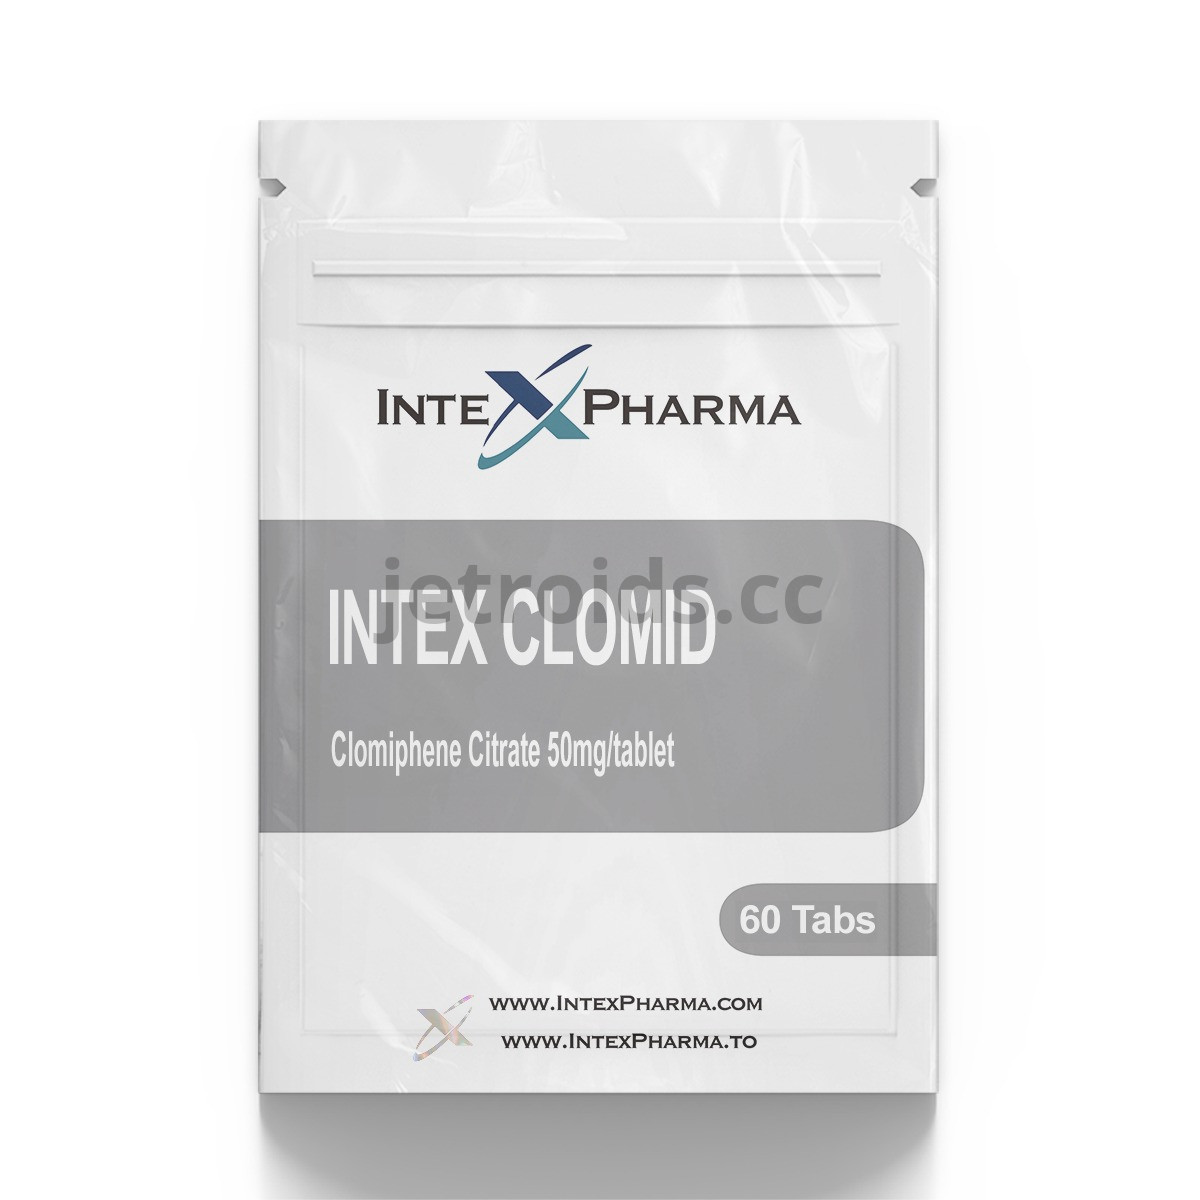 IntexPharma Intex Clomid Product Info